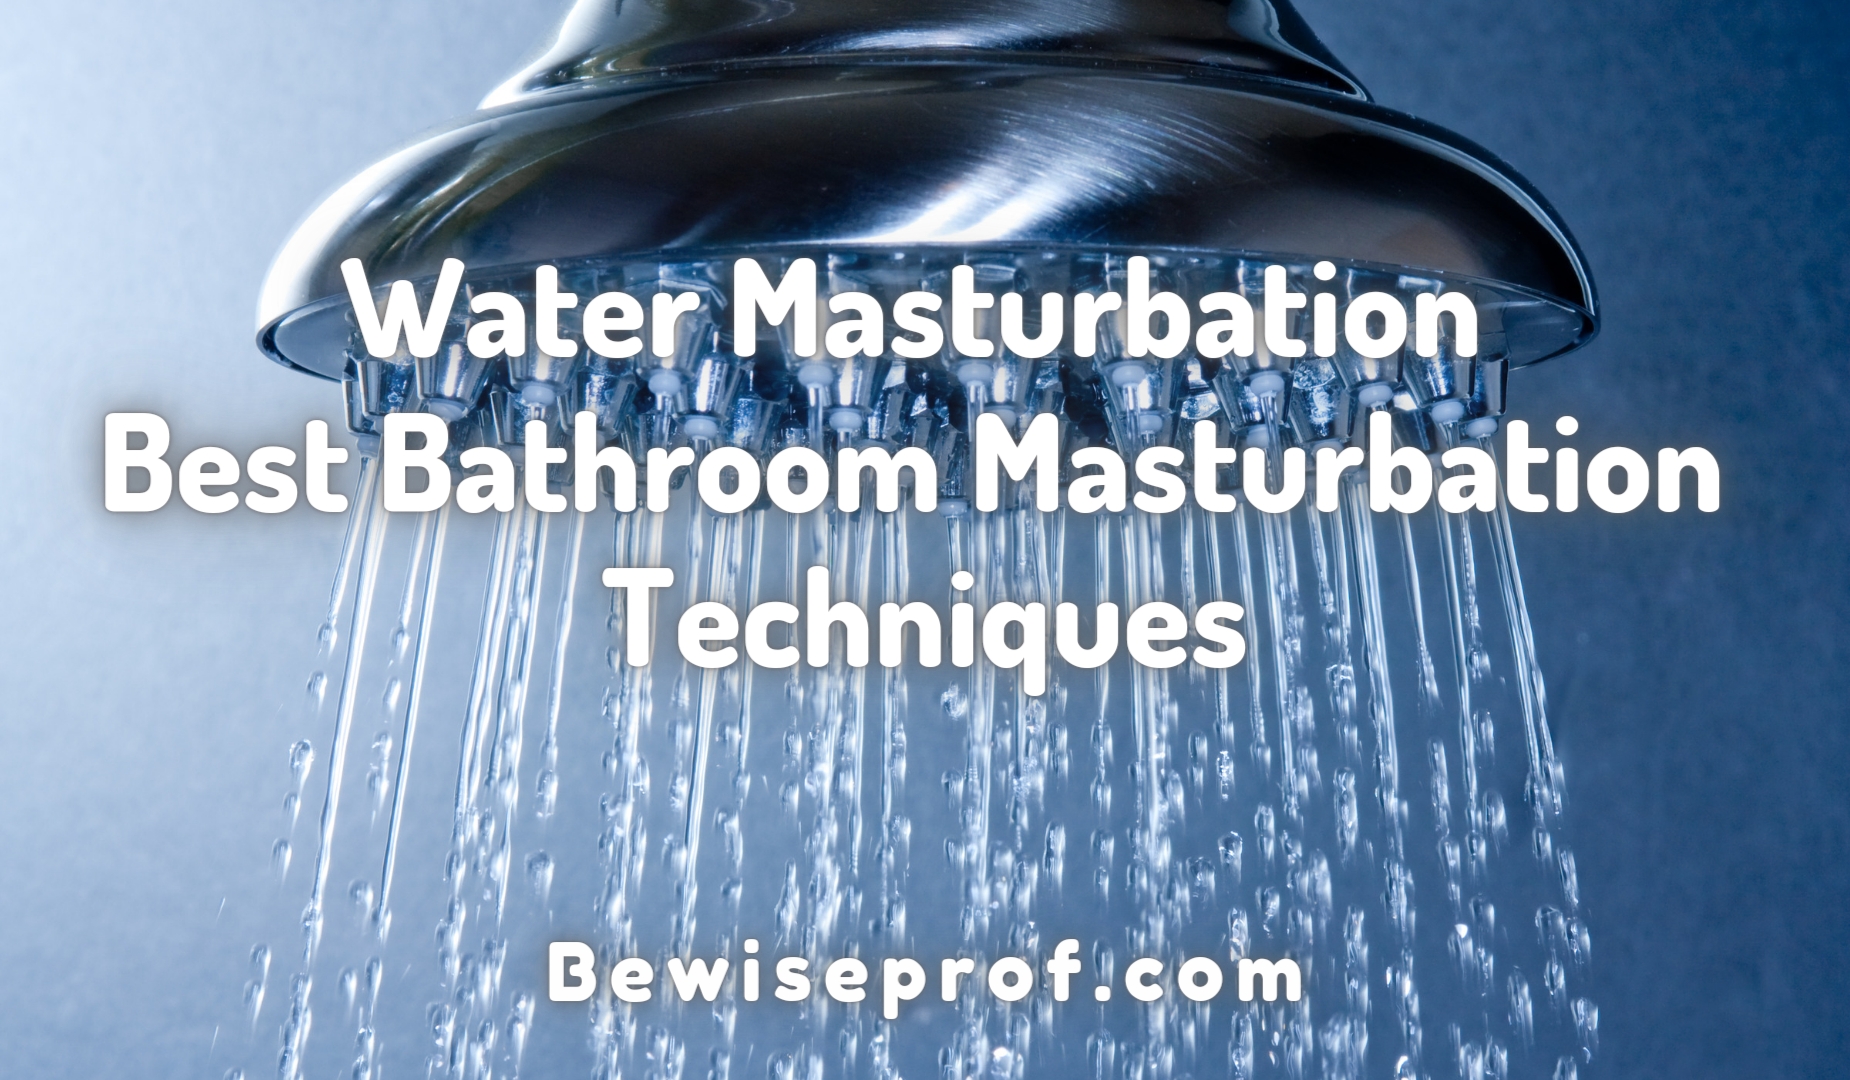 Water Masturbation Best Bathroom Masturbation Techniques To Enjoy It